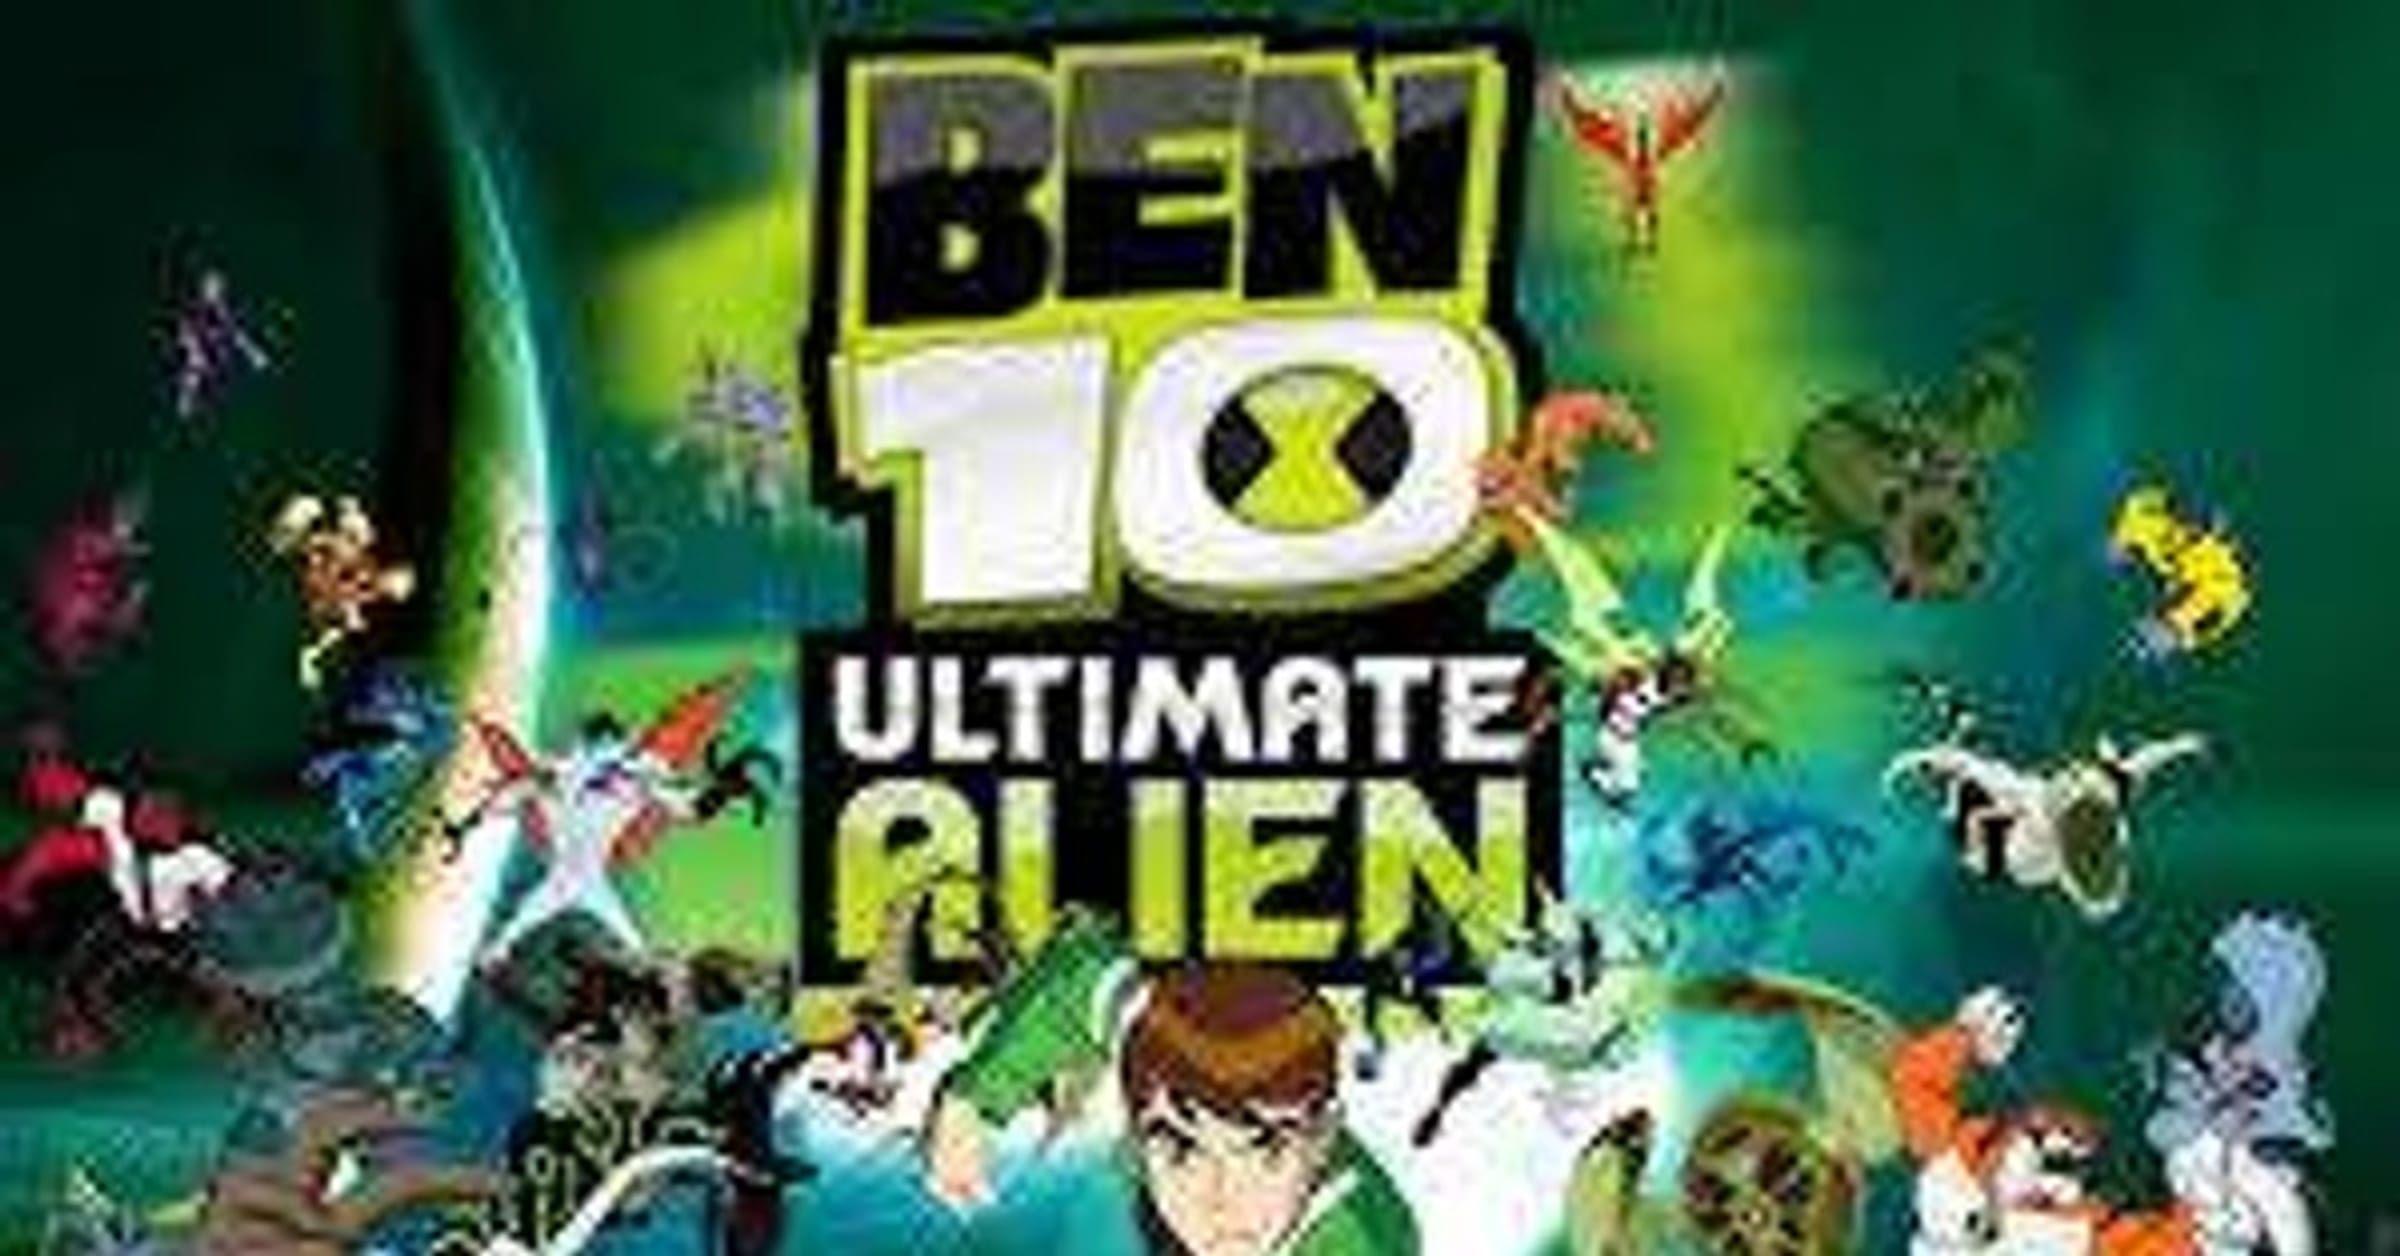 Ben 10 - All Aliens & Ultimate Skills Guide - Ultimate Alien